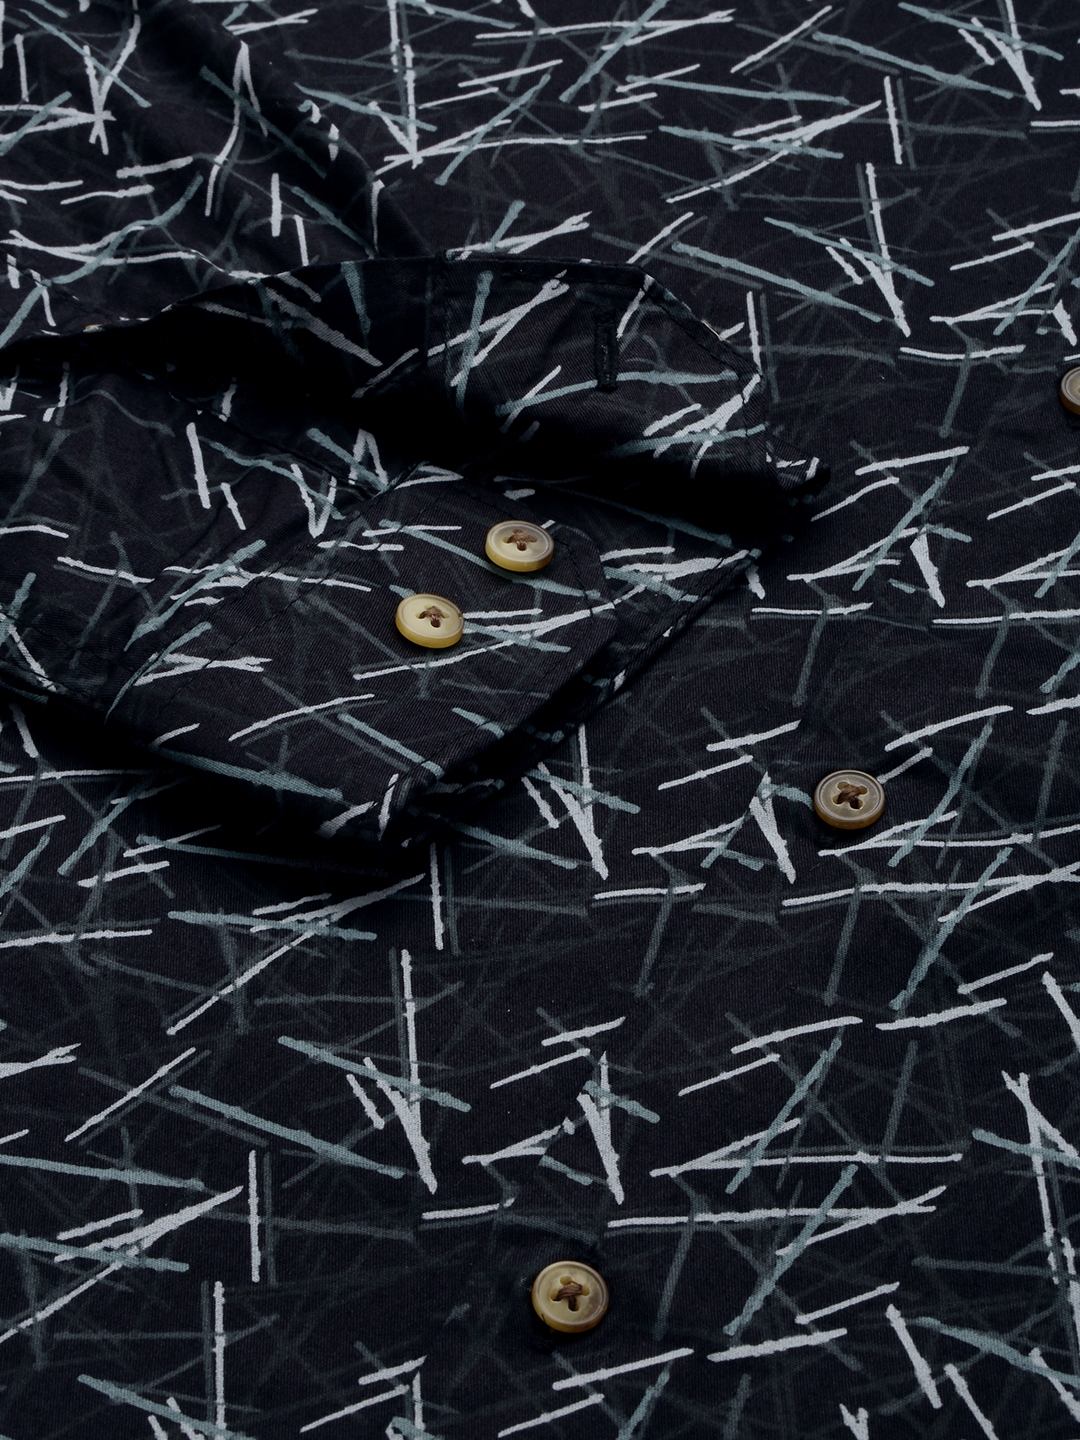 SHOWOFF Men's Spread Collar Black Printed Shirt